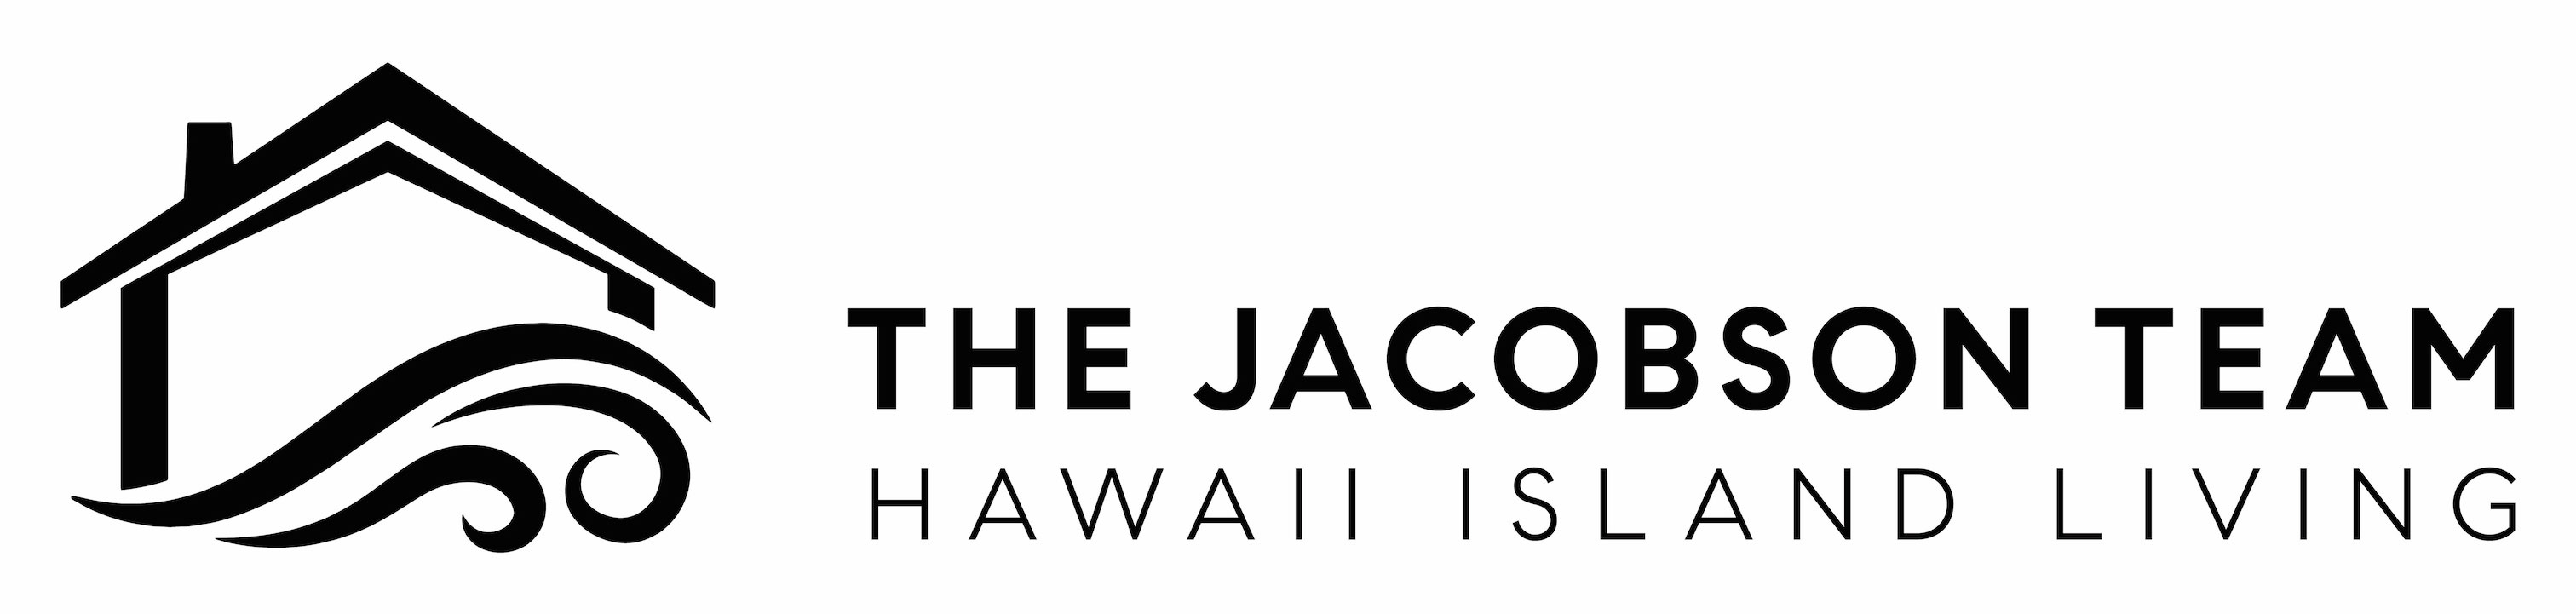 A text banner describing The Jacobson Team Hawaii Island Living.